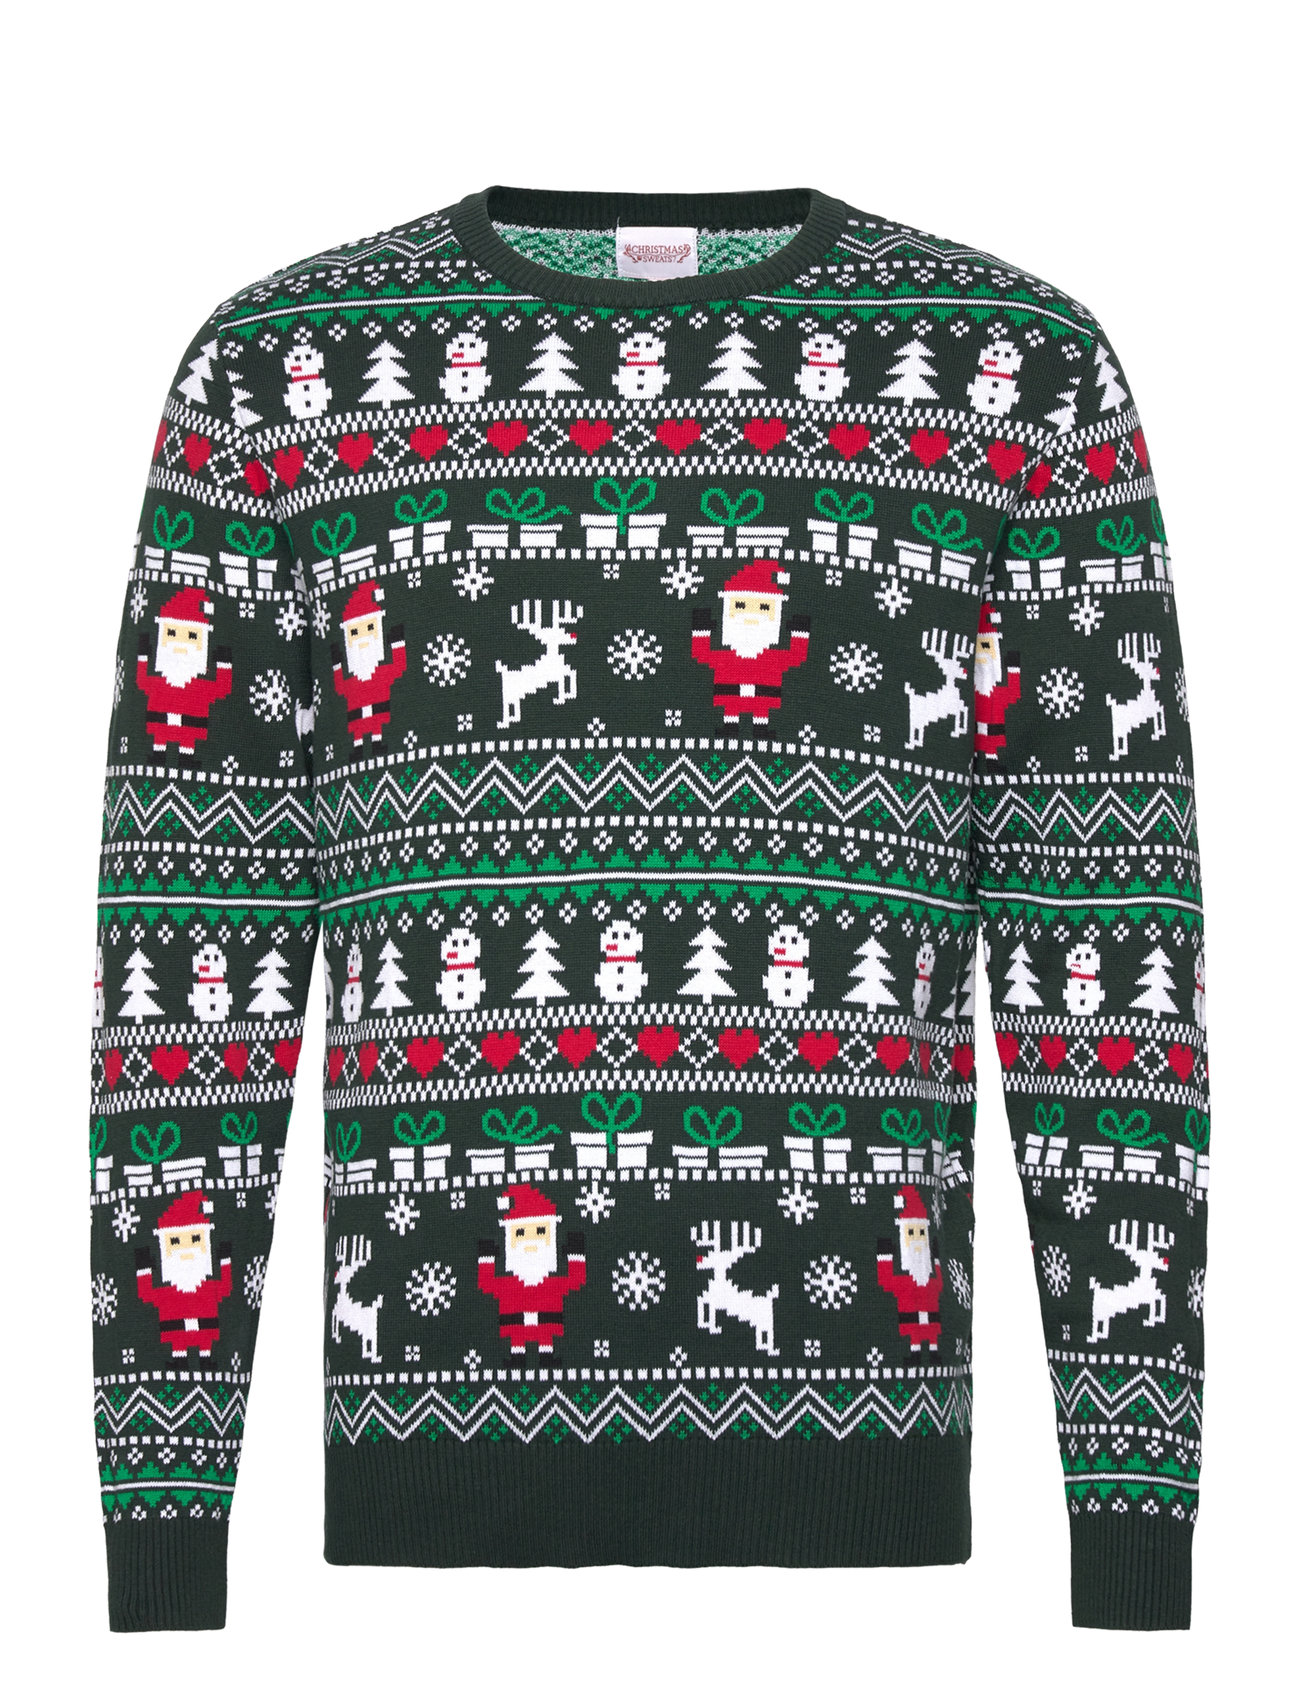 The Fine Christmas Sweater Tops Knitwear Round Necks Green Christmas Sweats